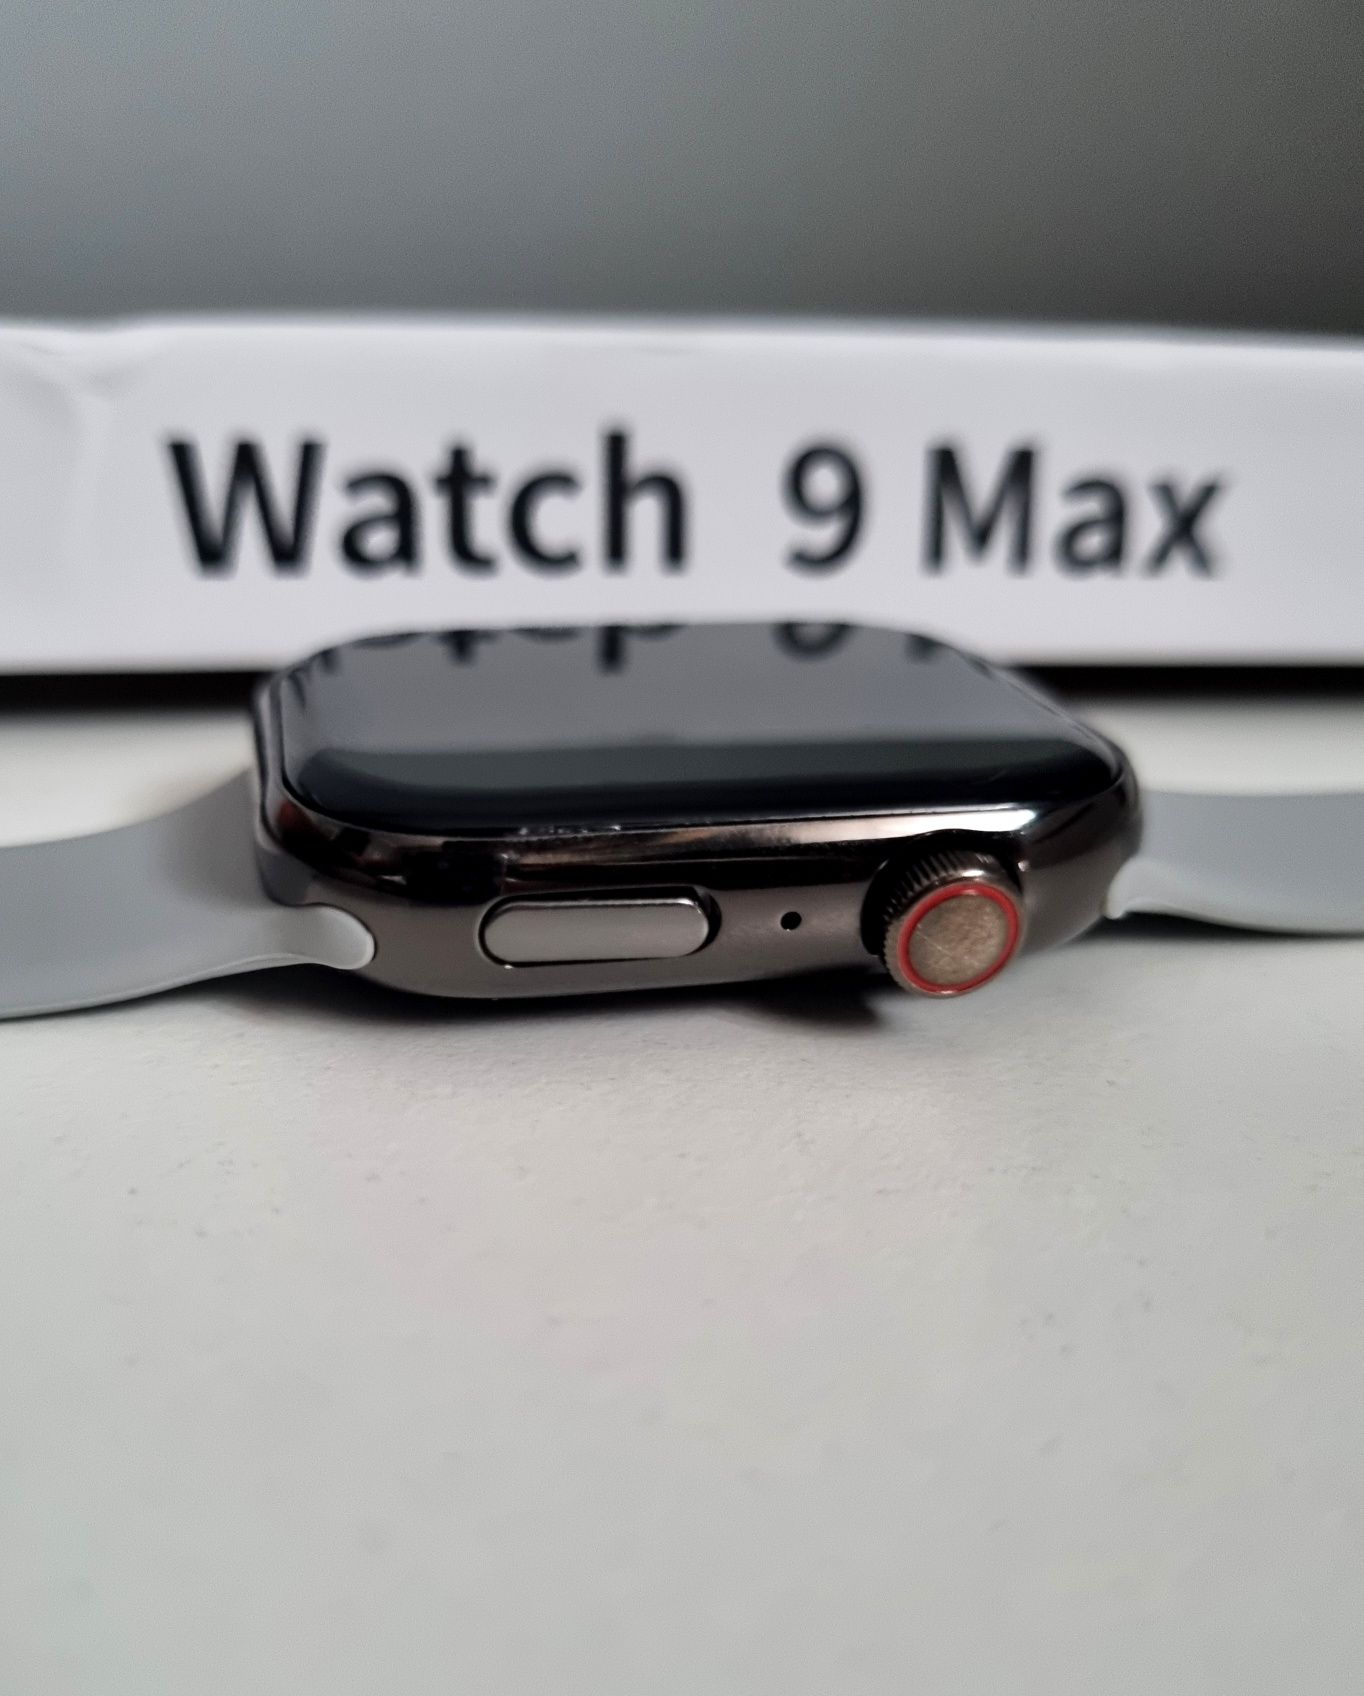 Smartwatch S9 Max szary